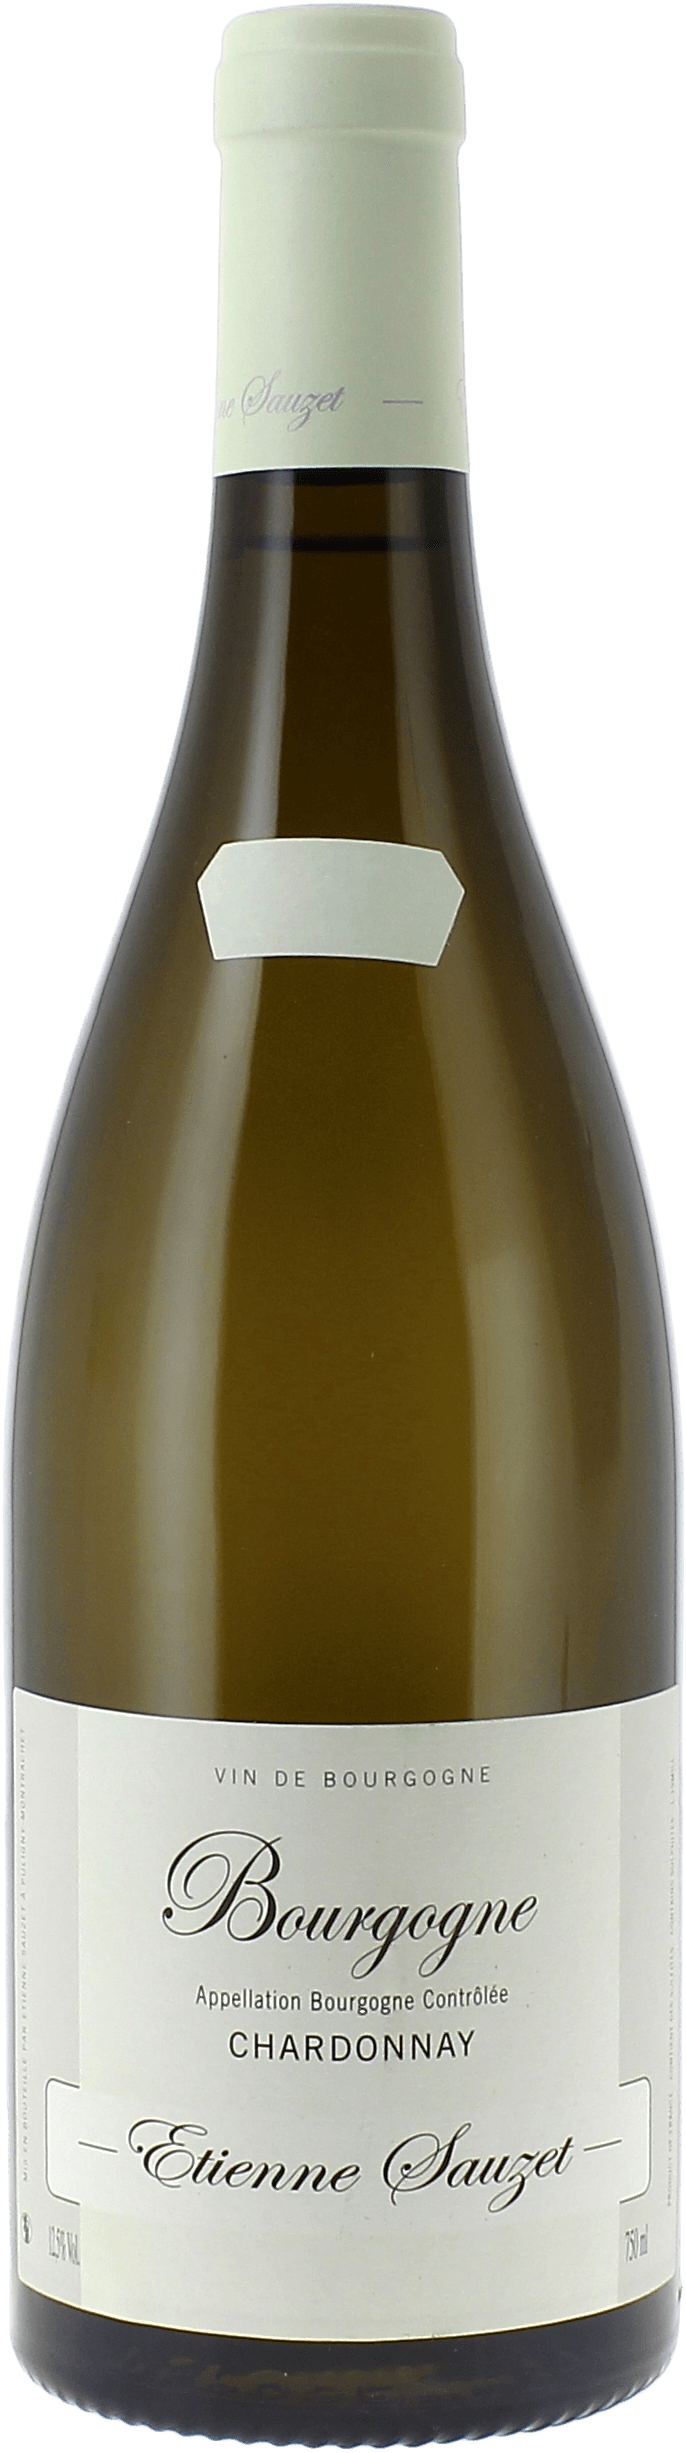 Bourgogne blanc 2017 Domaine SAUZET, Bourgogne blanc